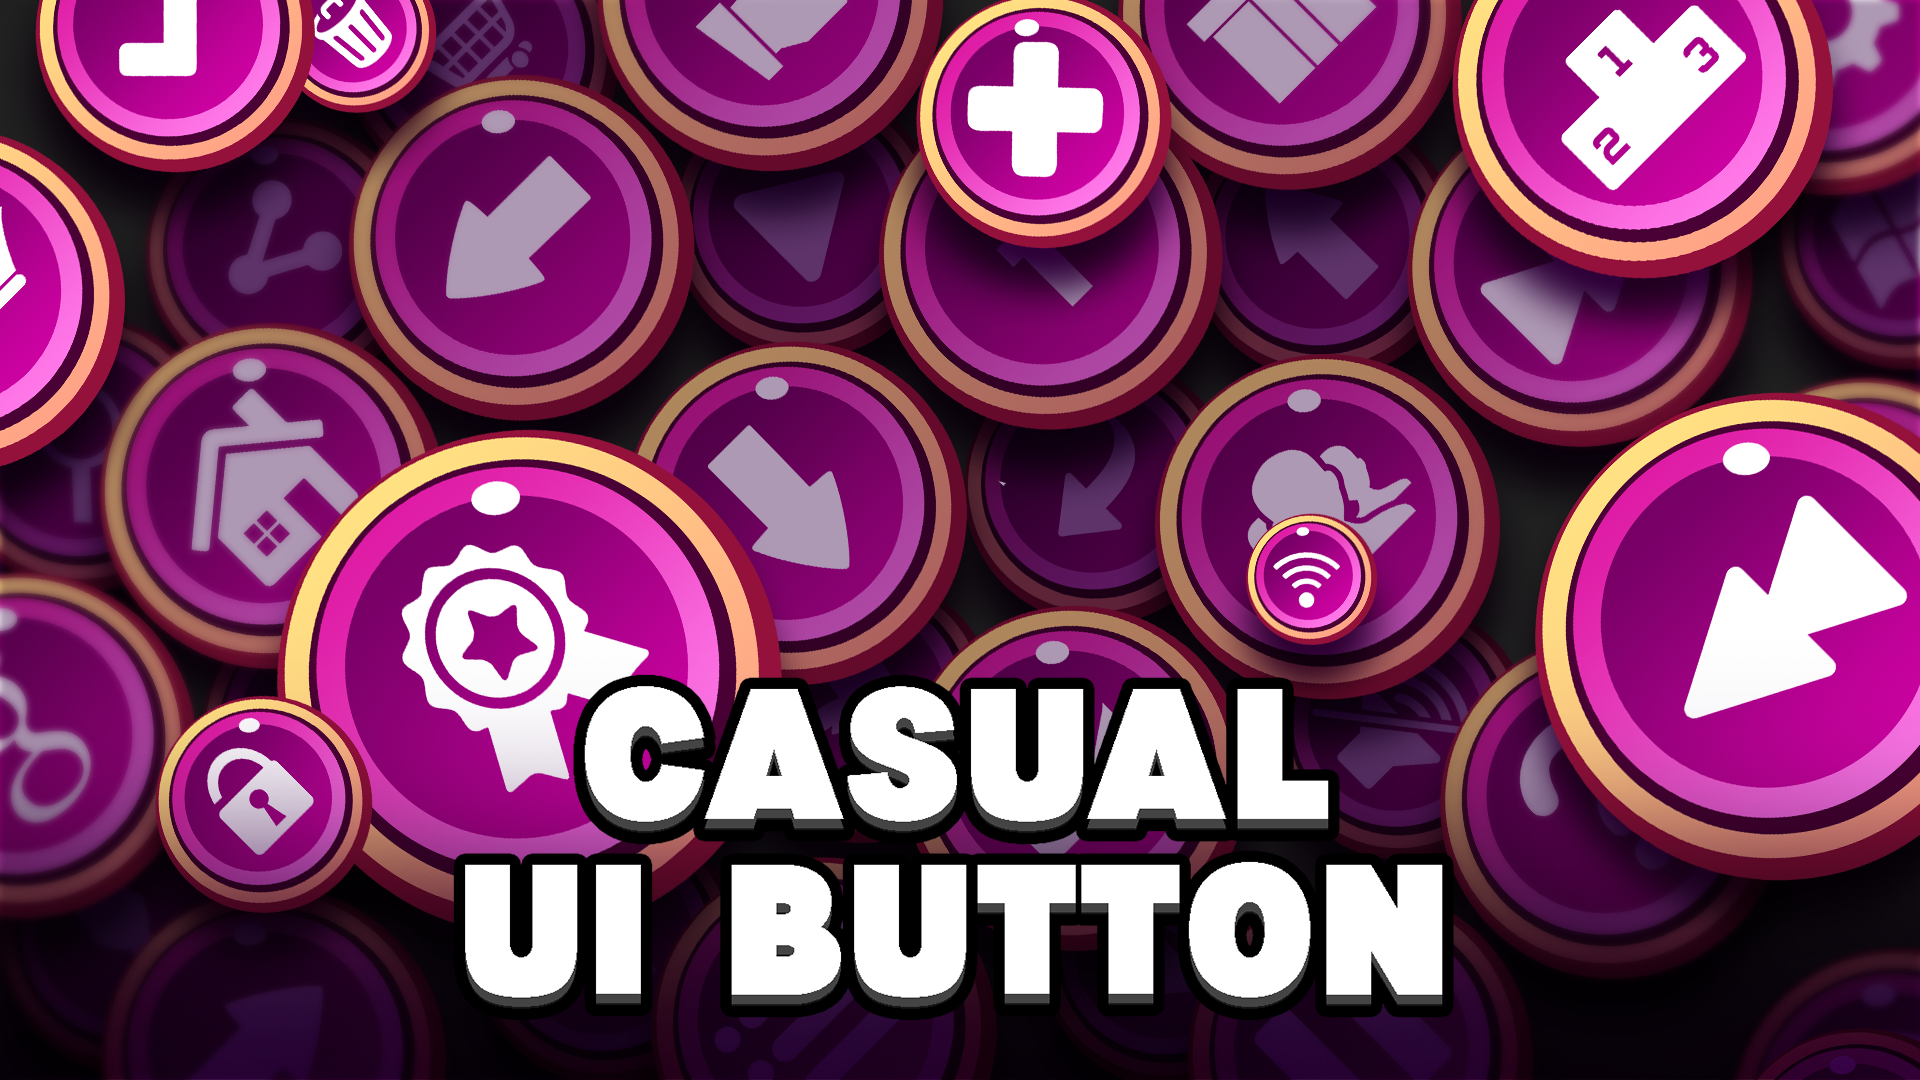 Casual UI Button #12